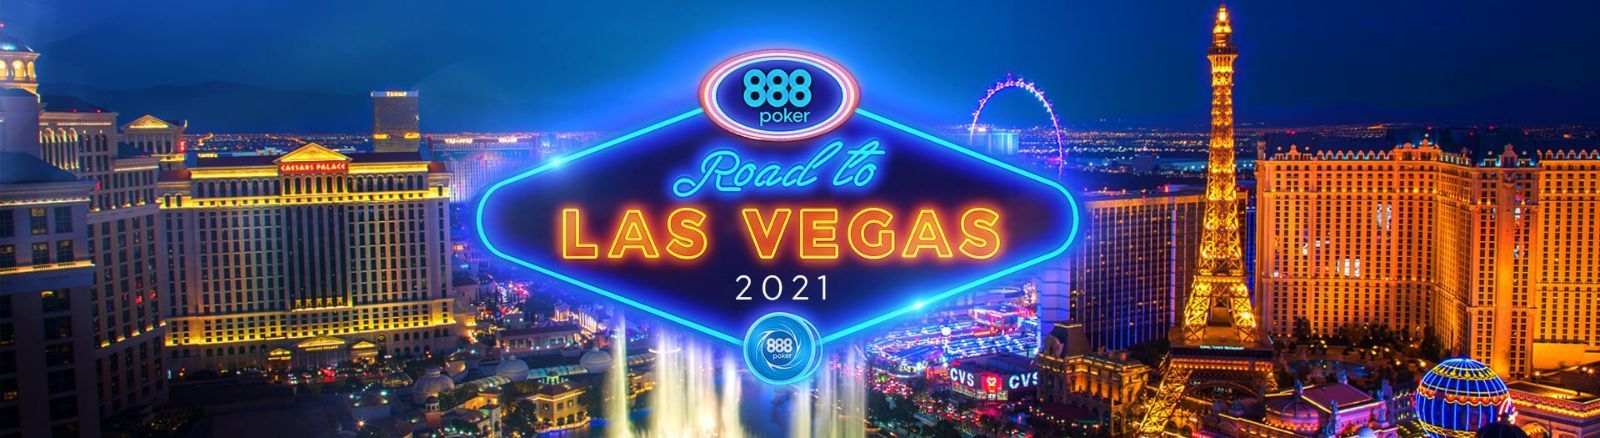 888 Покер проводит акцию Road to Vegas с путевками на WSOP за $13 000